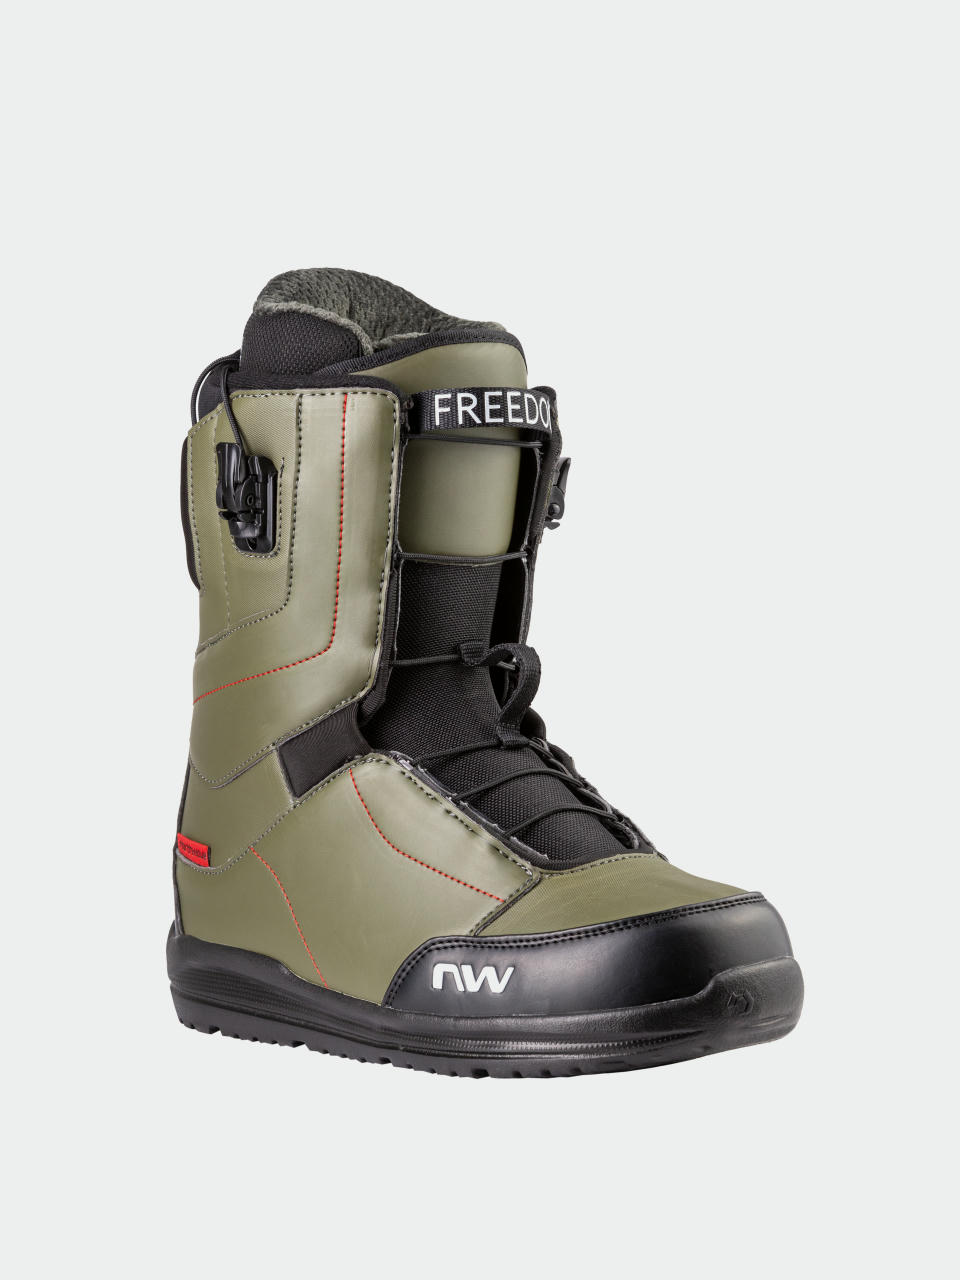 Northwave Freedom Sls Snowboard boots (green forest/black)